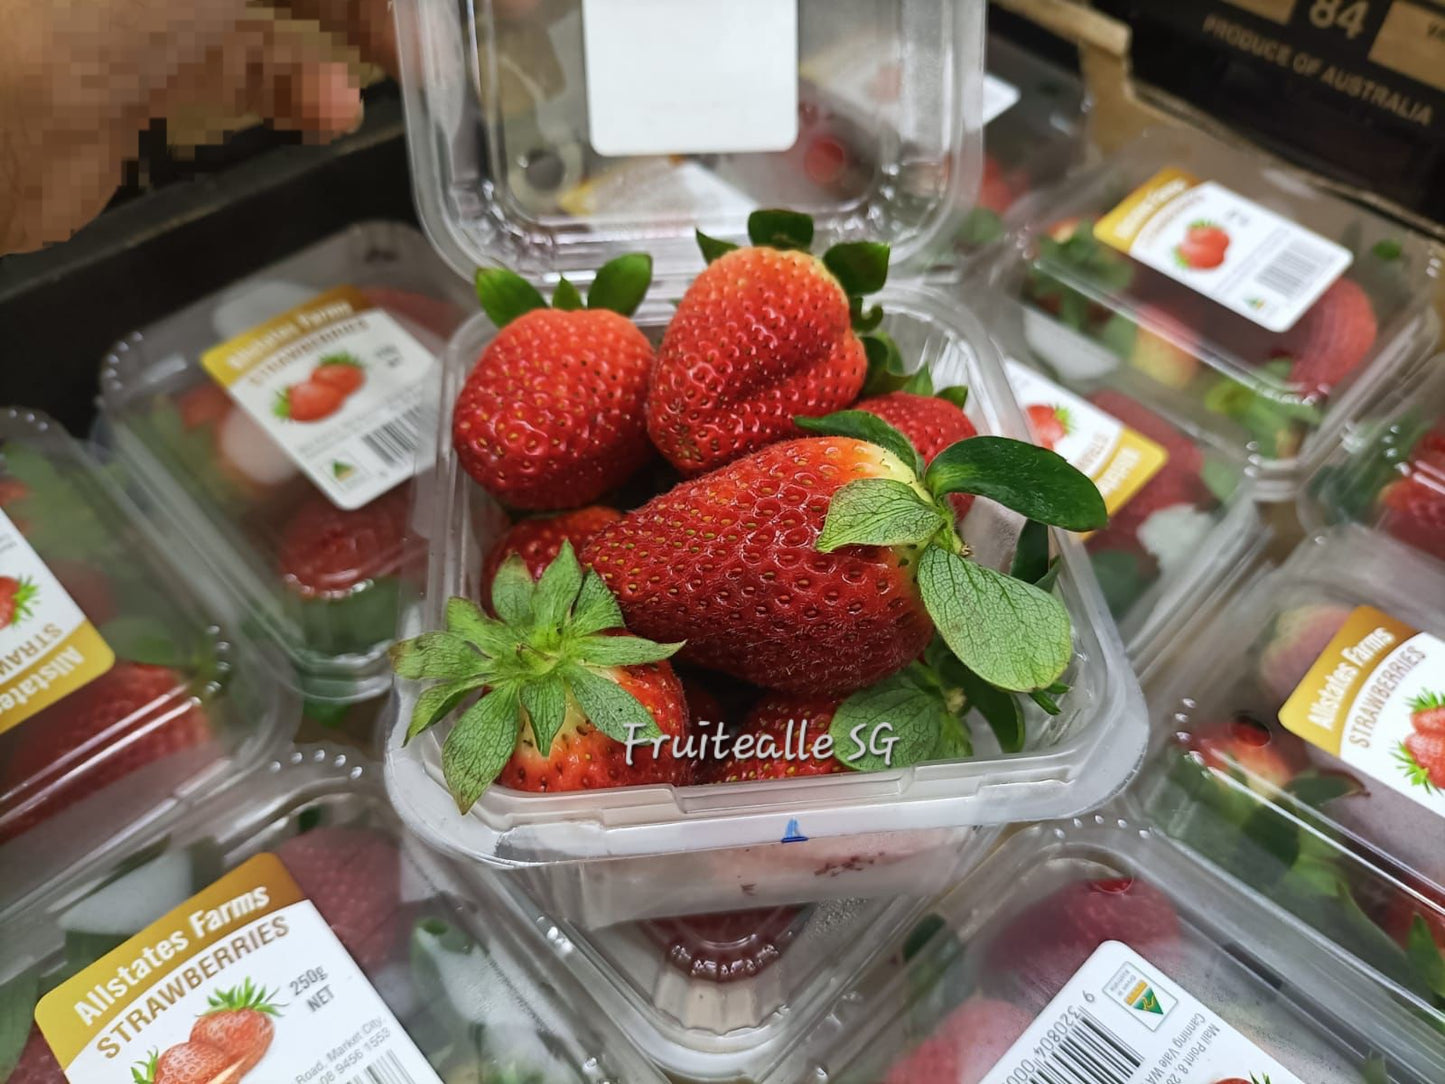 Strawberry - Australia Red Strawberries【250gm】